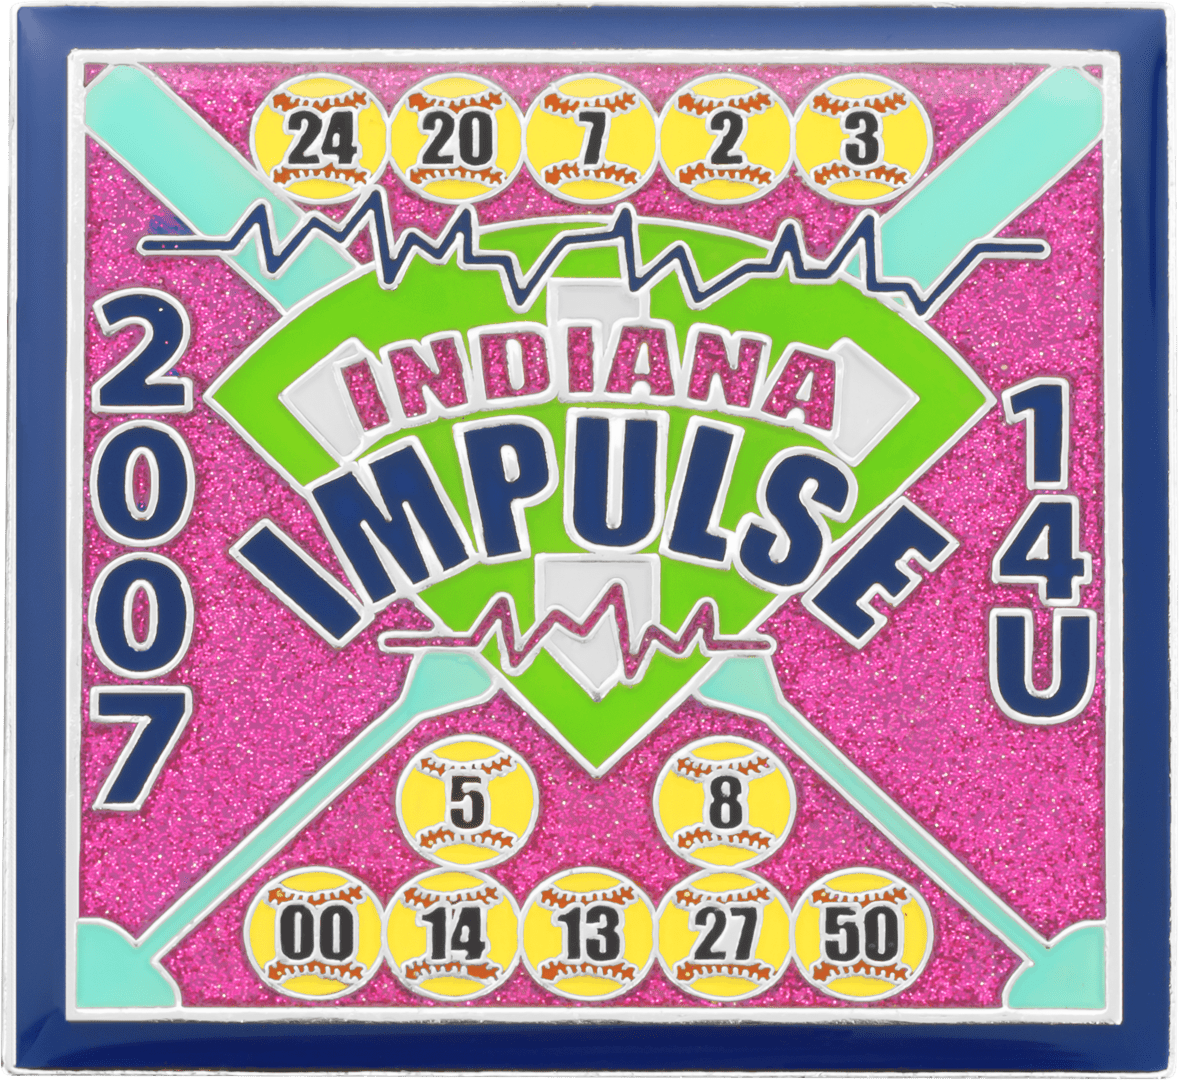 Indiana Impulse